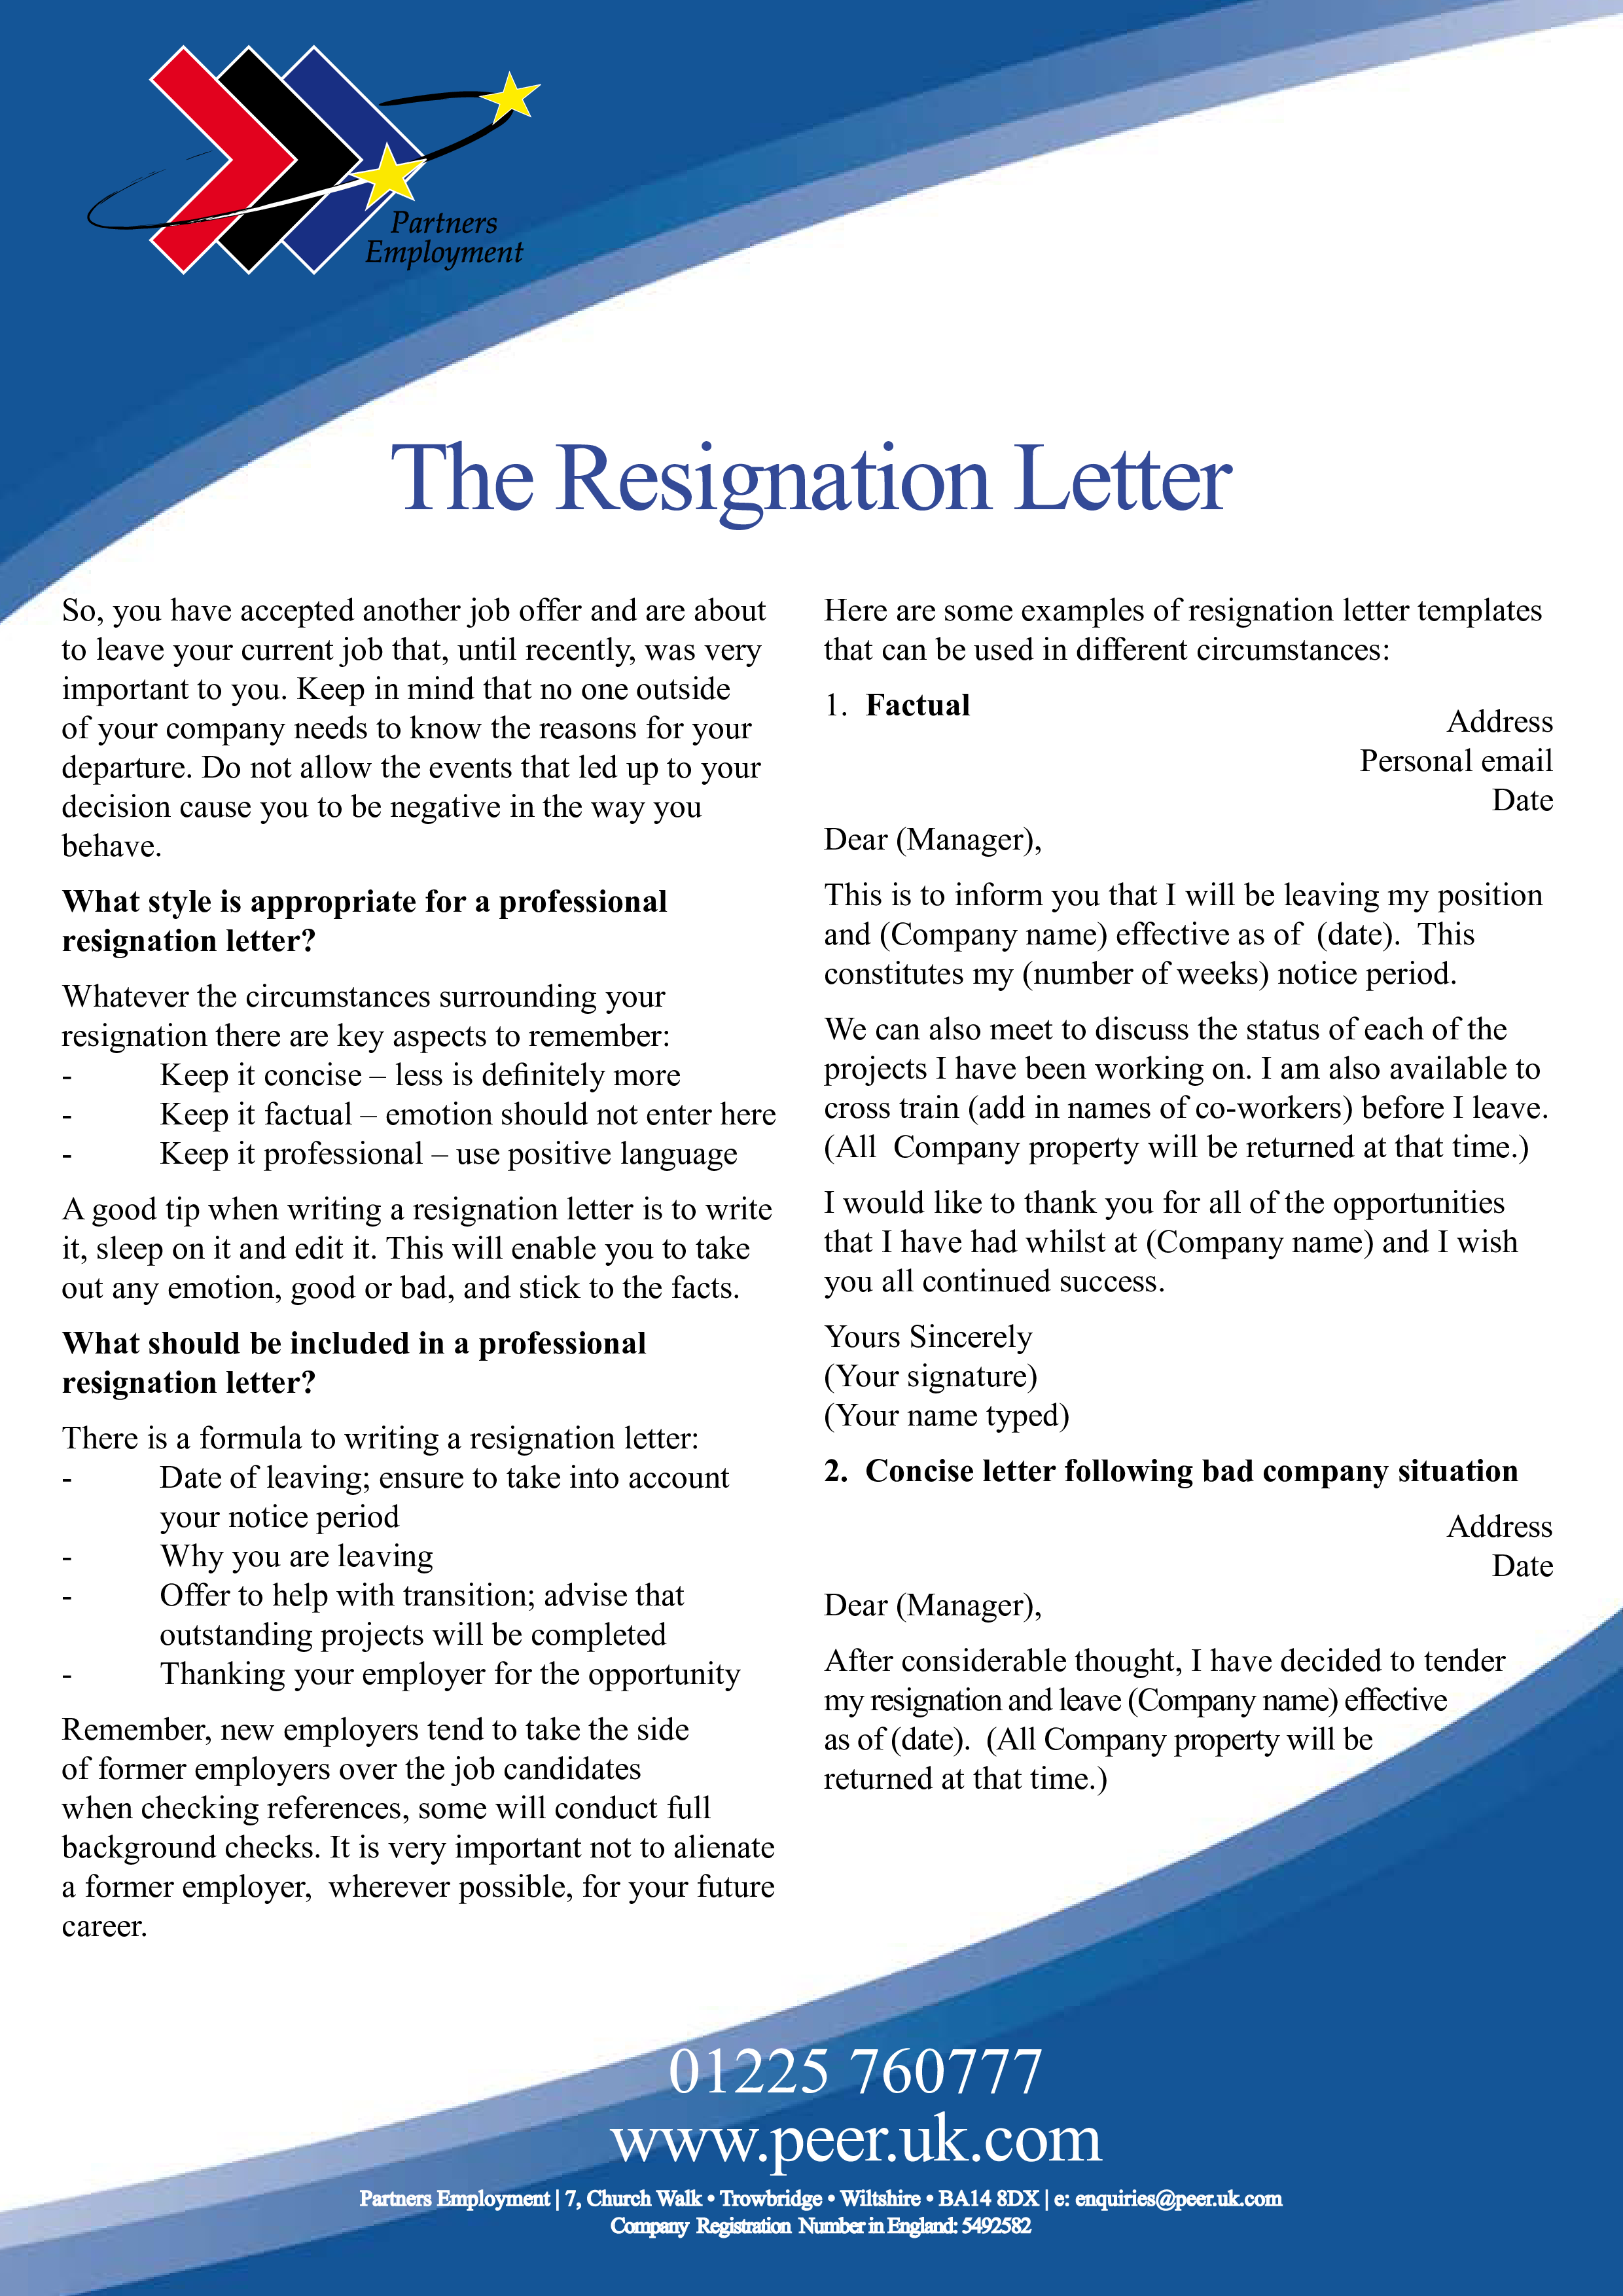 employee thank you letter resignation plantilla imagen principal